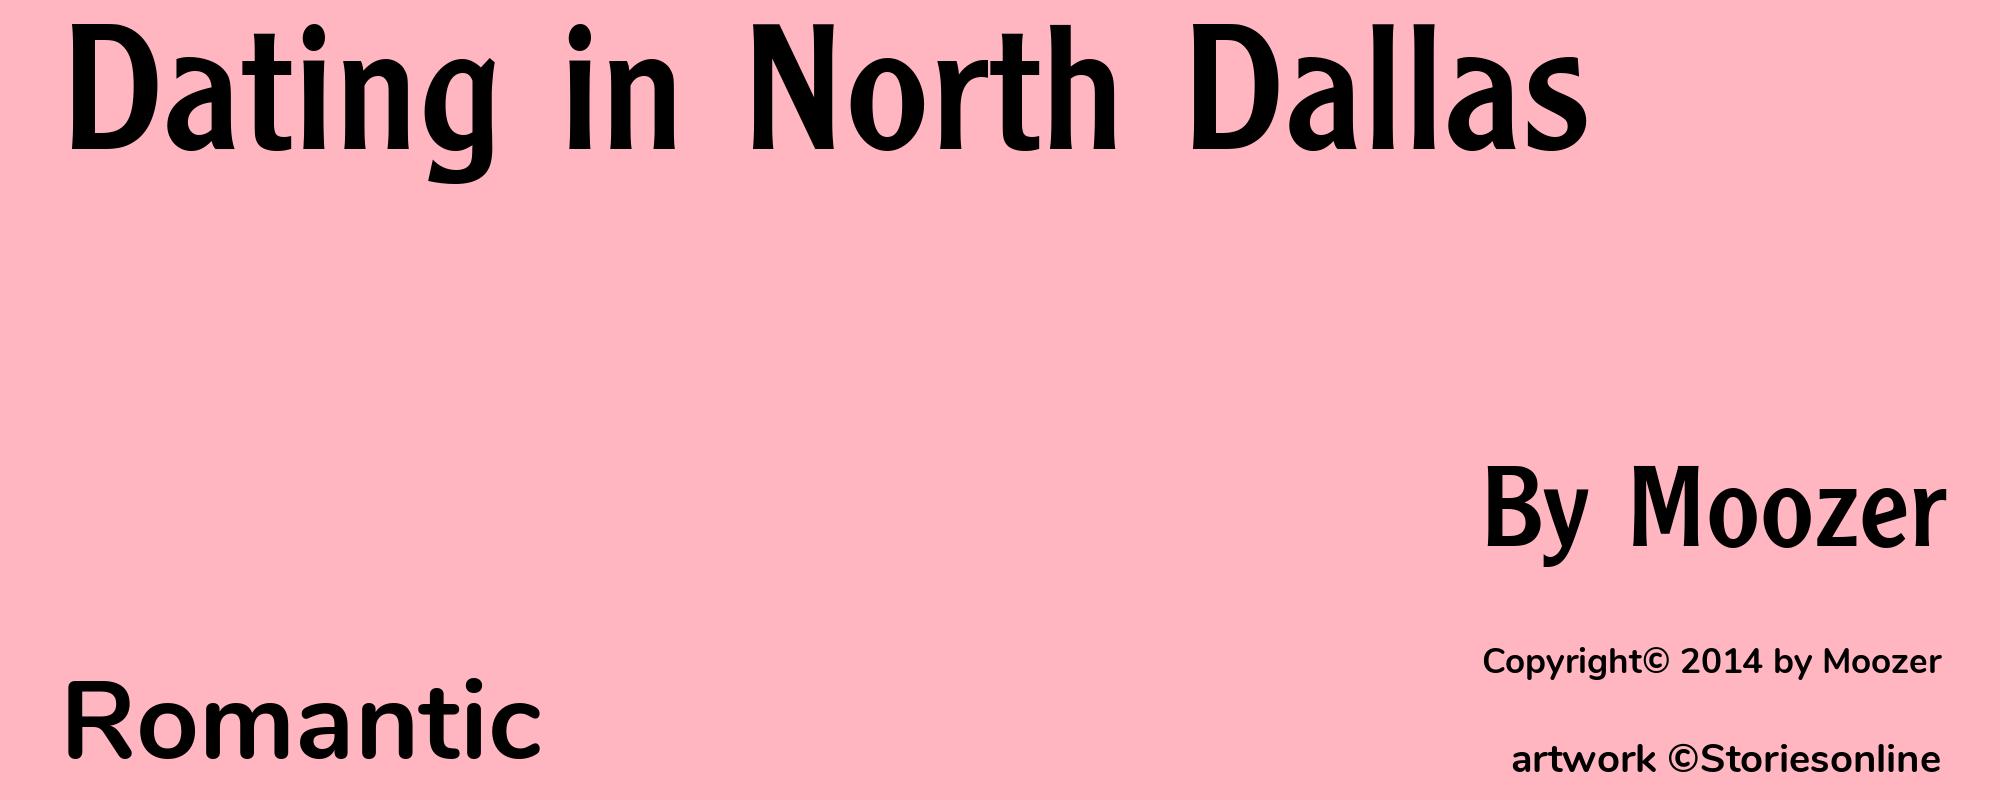 Dating in North Dallas - Cover